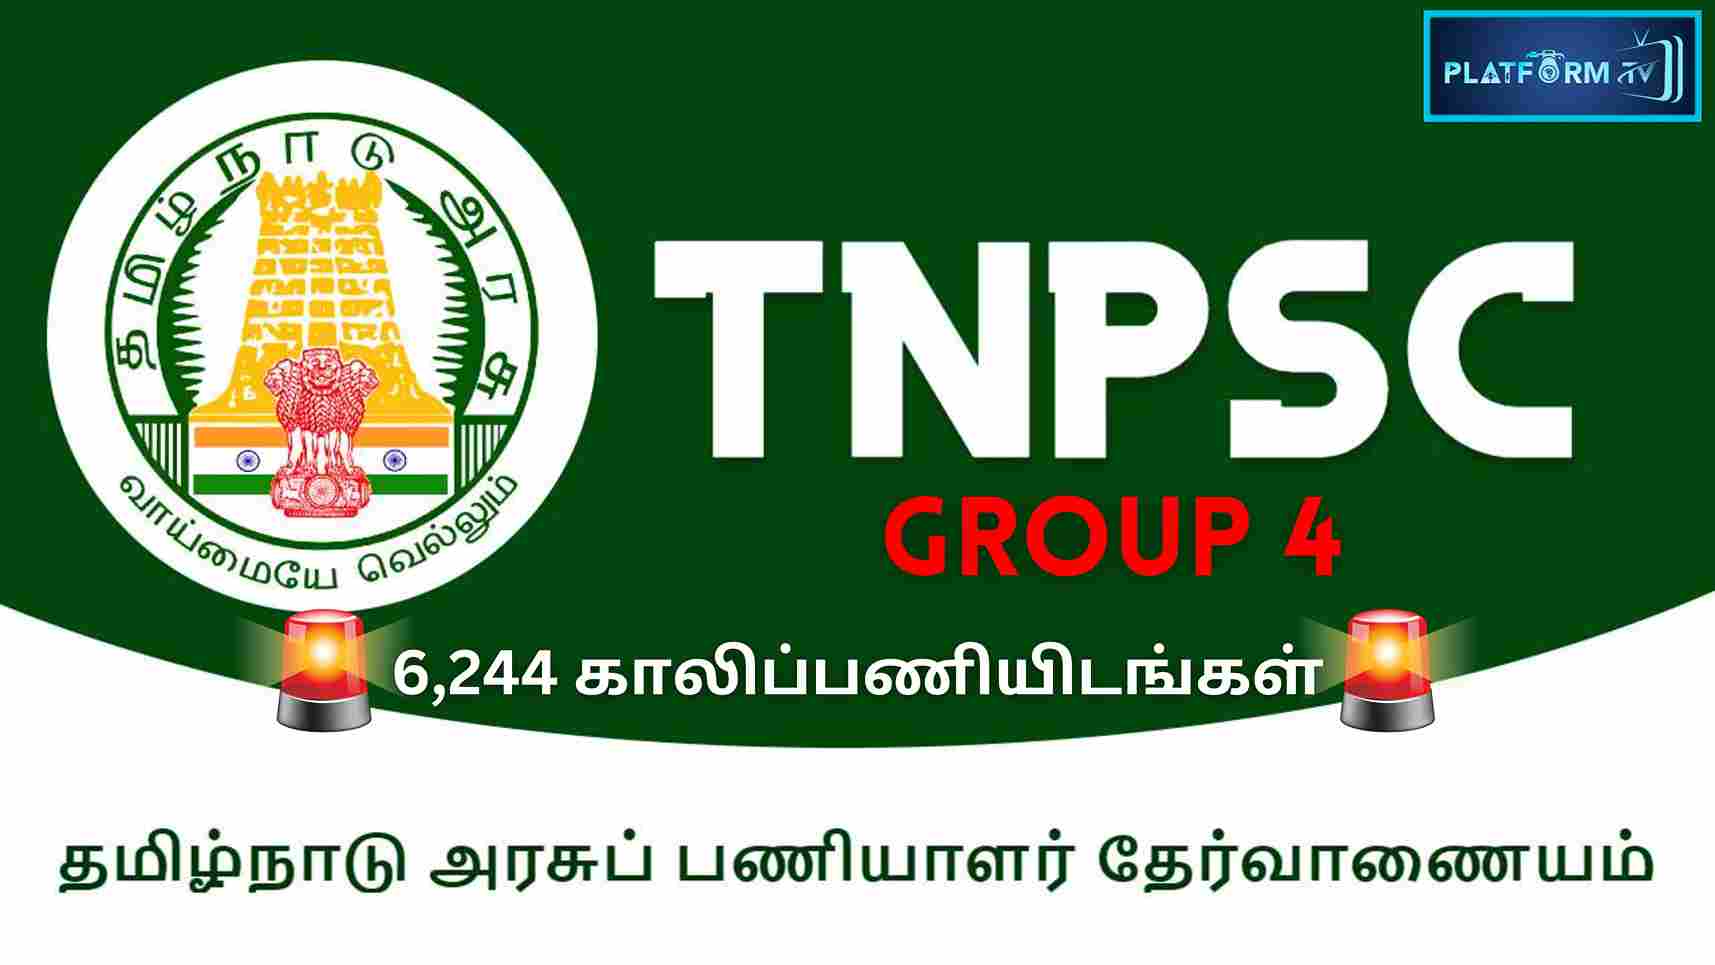 TNPSC Exam Group 4 - Platform Tamil